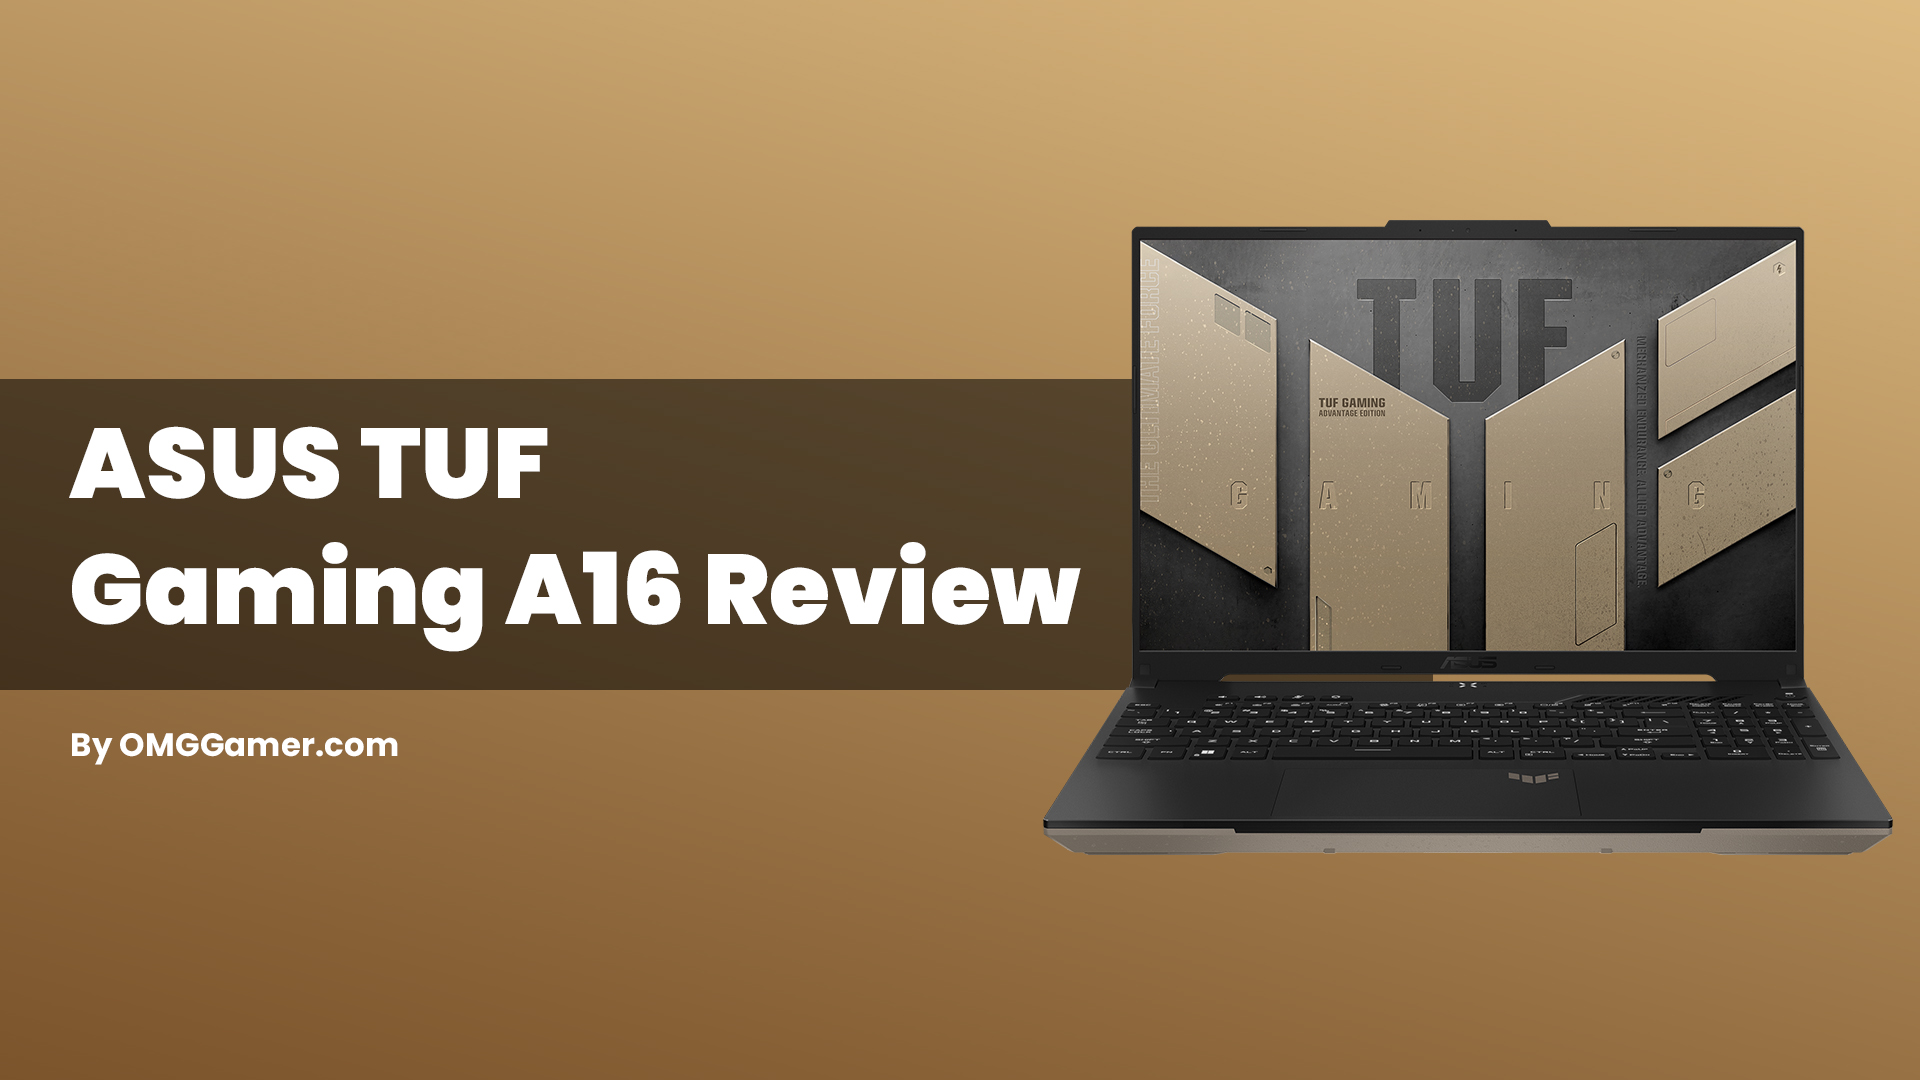 ASUS TUF Gaming A16 Review